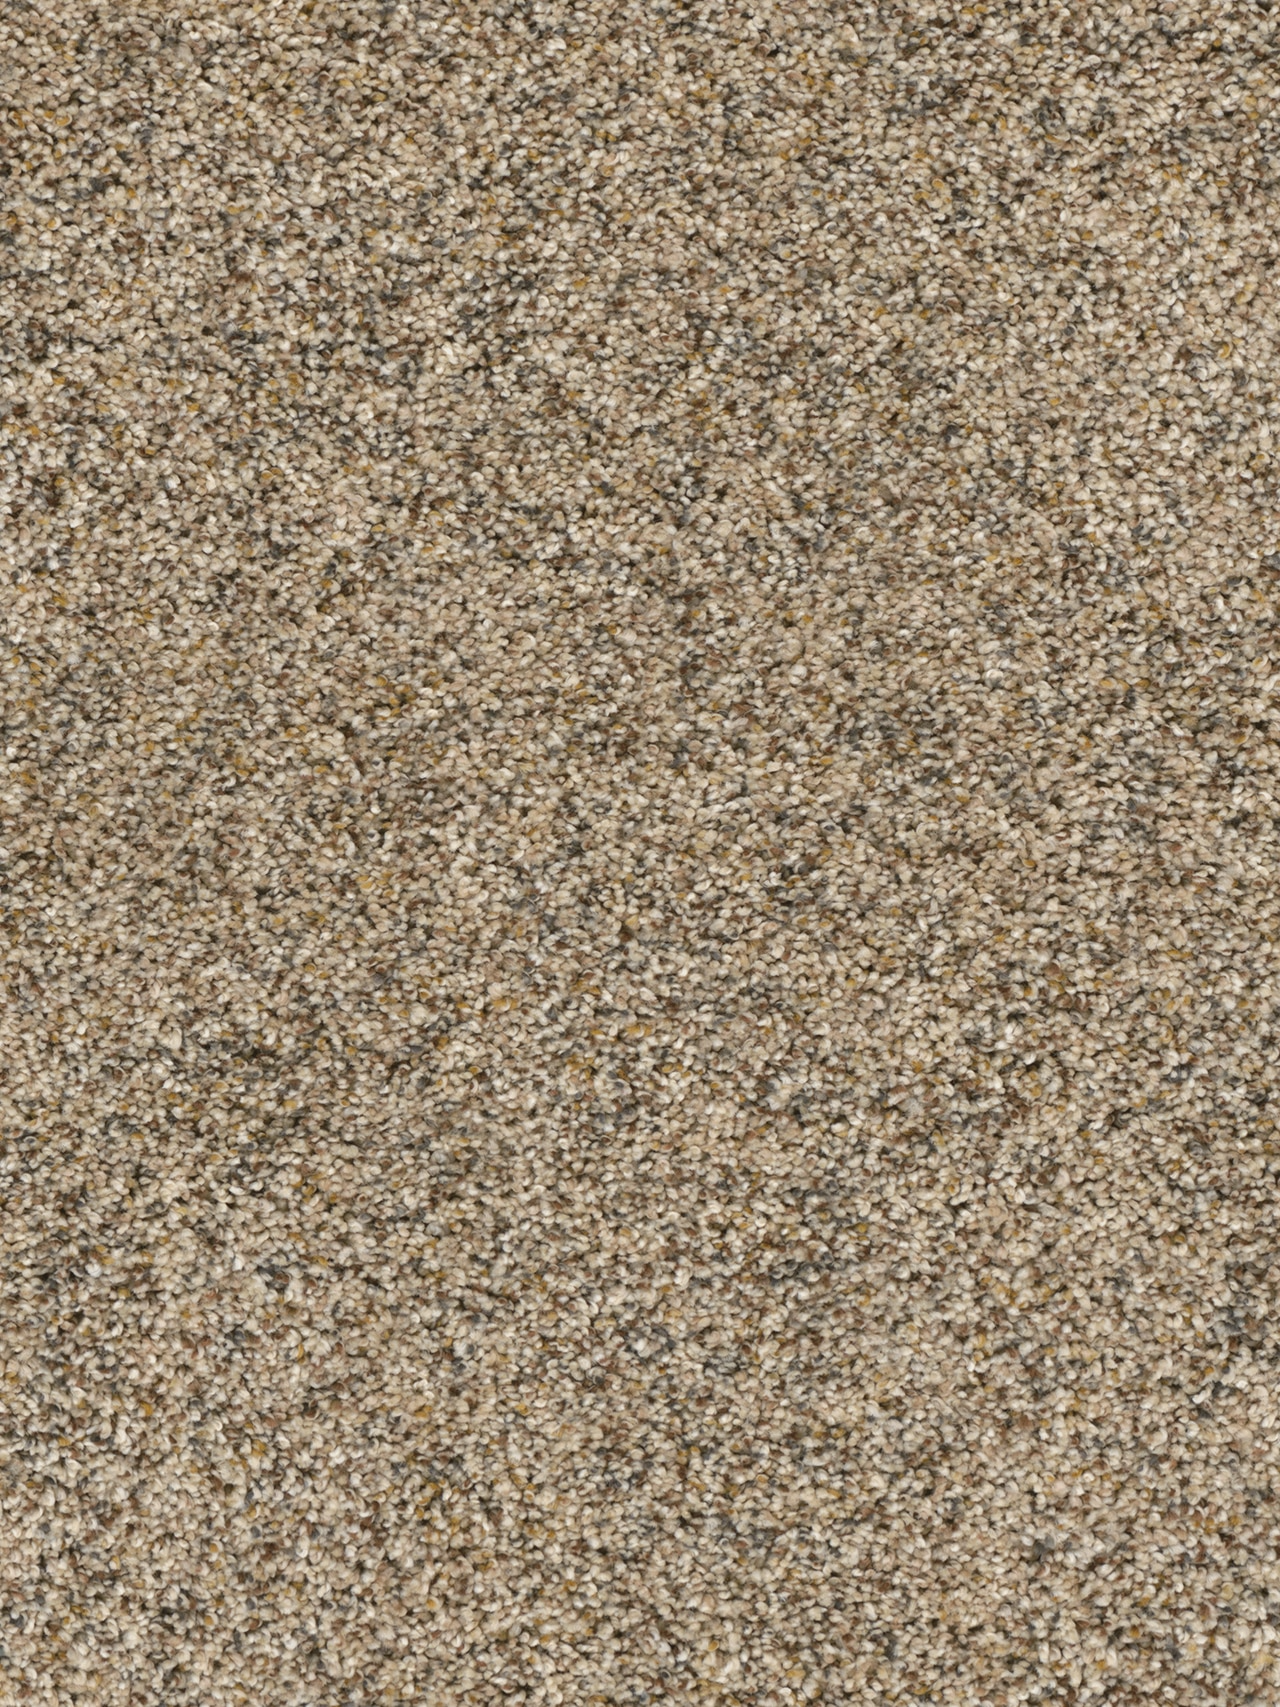 Carnival Sand Pebble Carpet